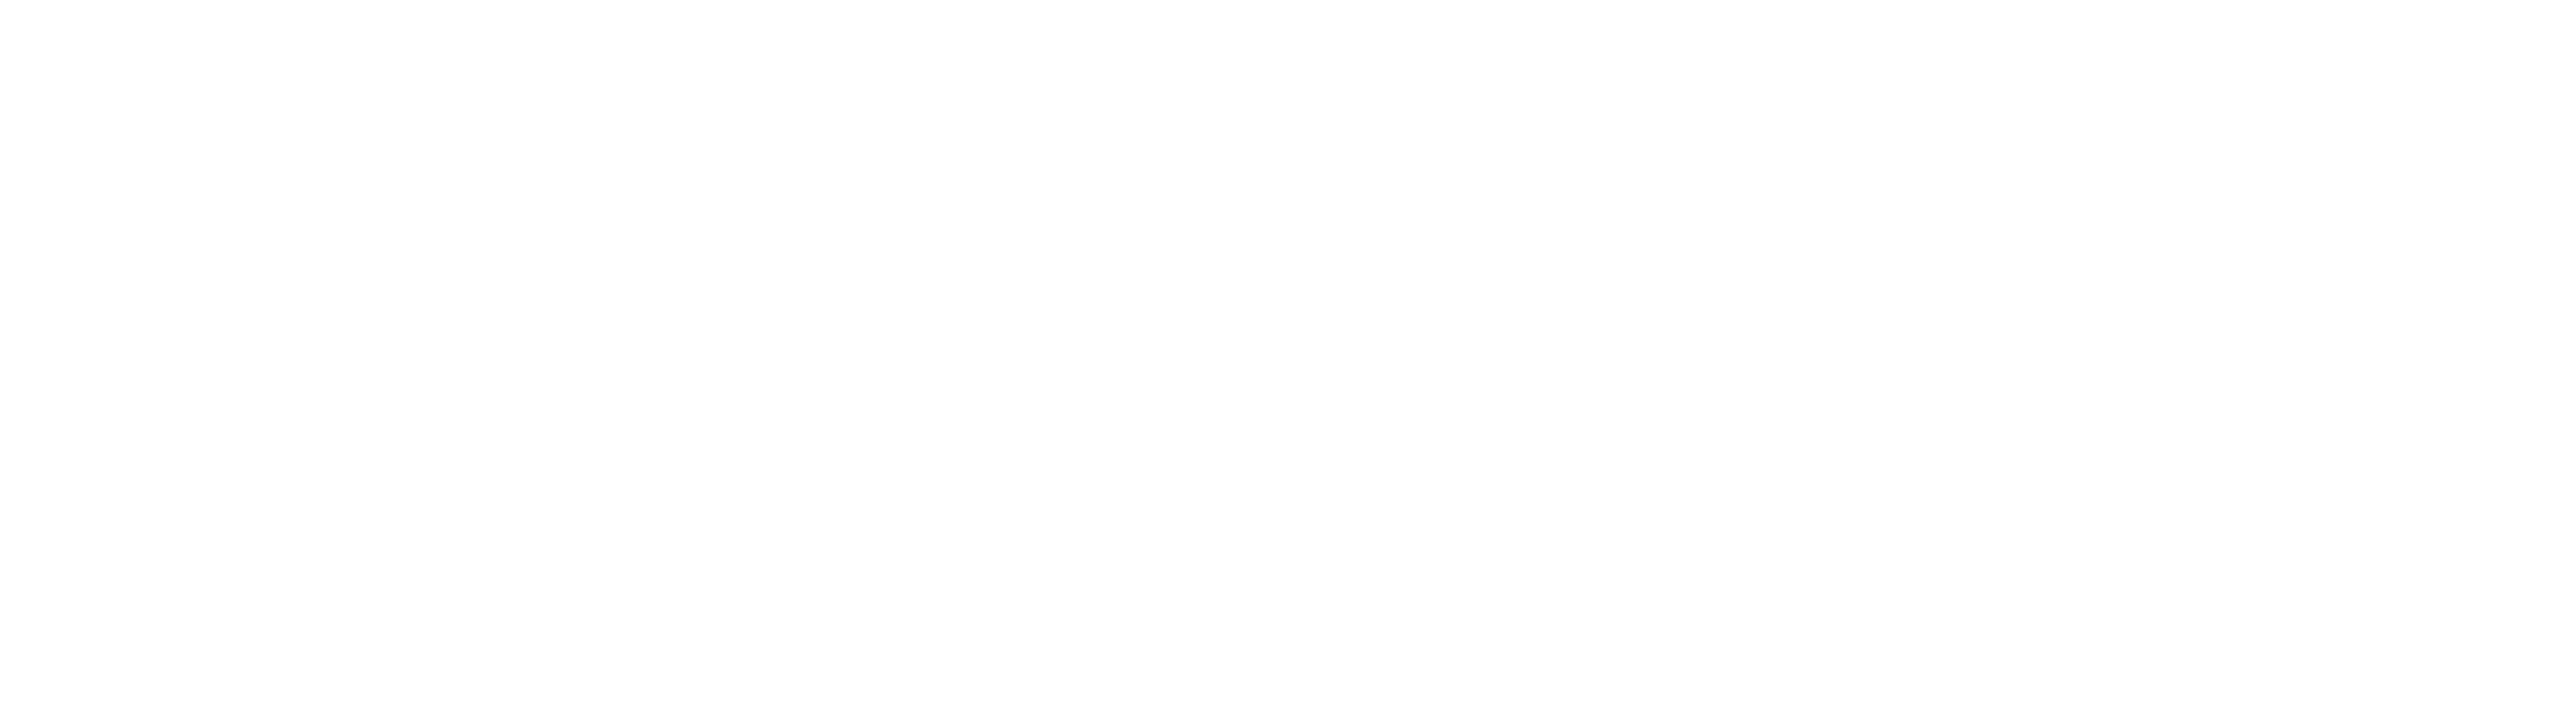 The Cornerstone white logo